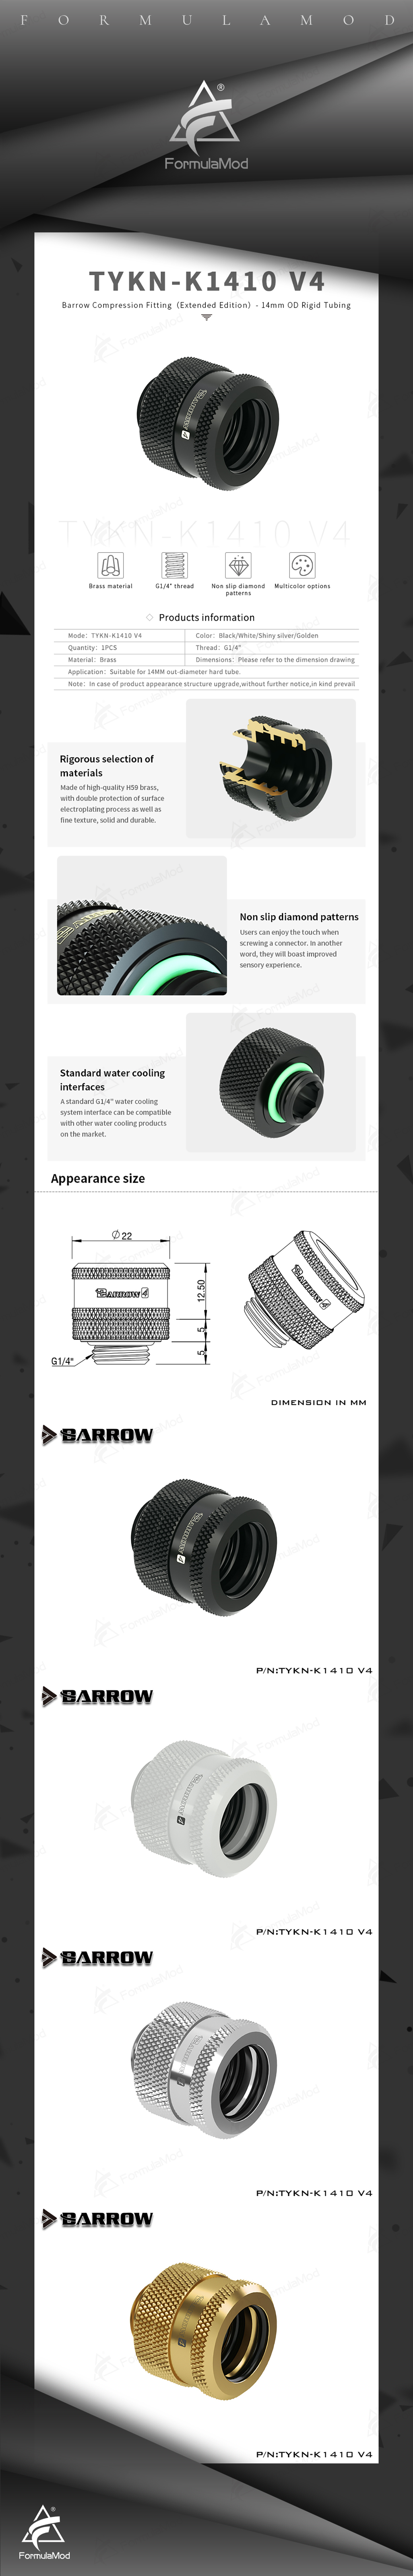 Barrow OD14mm Hard Tube Fittings, G1/4 Adapters For OD14mm Hard Tubes, TYKN-K1410 V4  